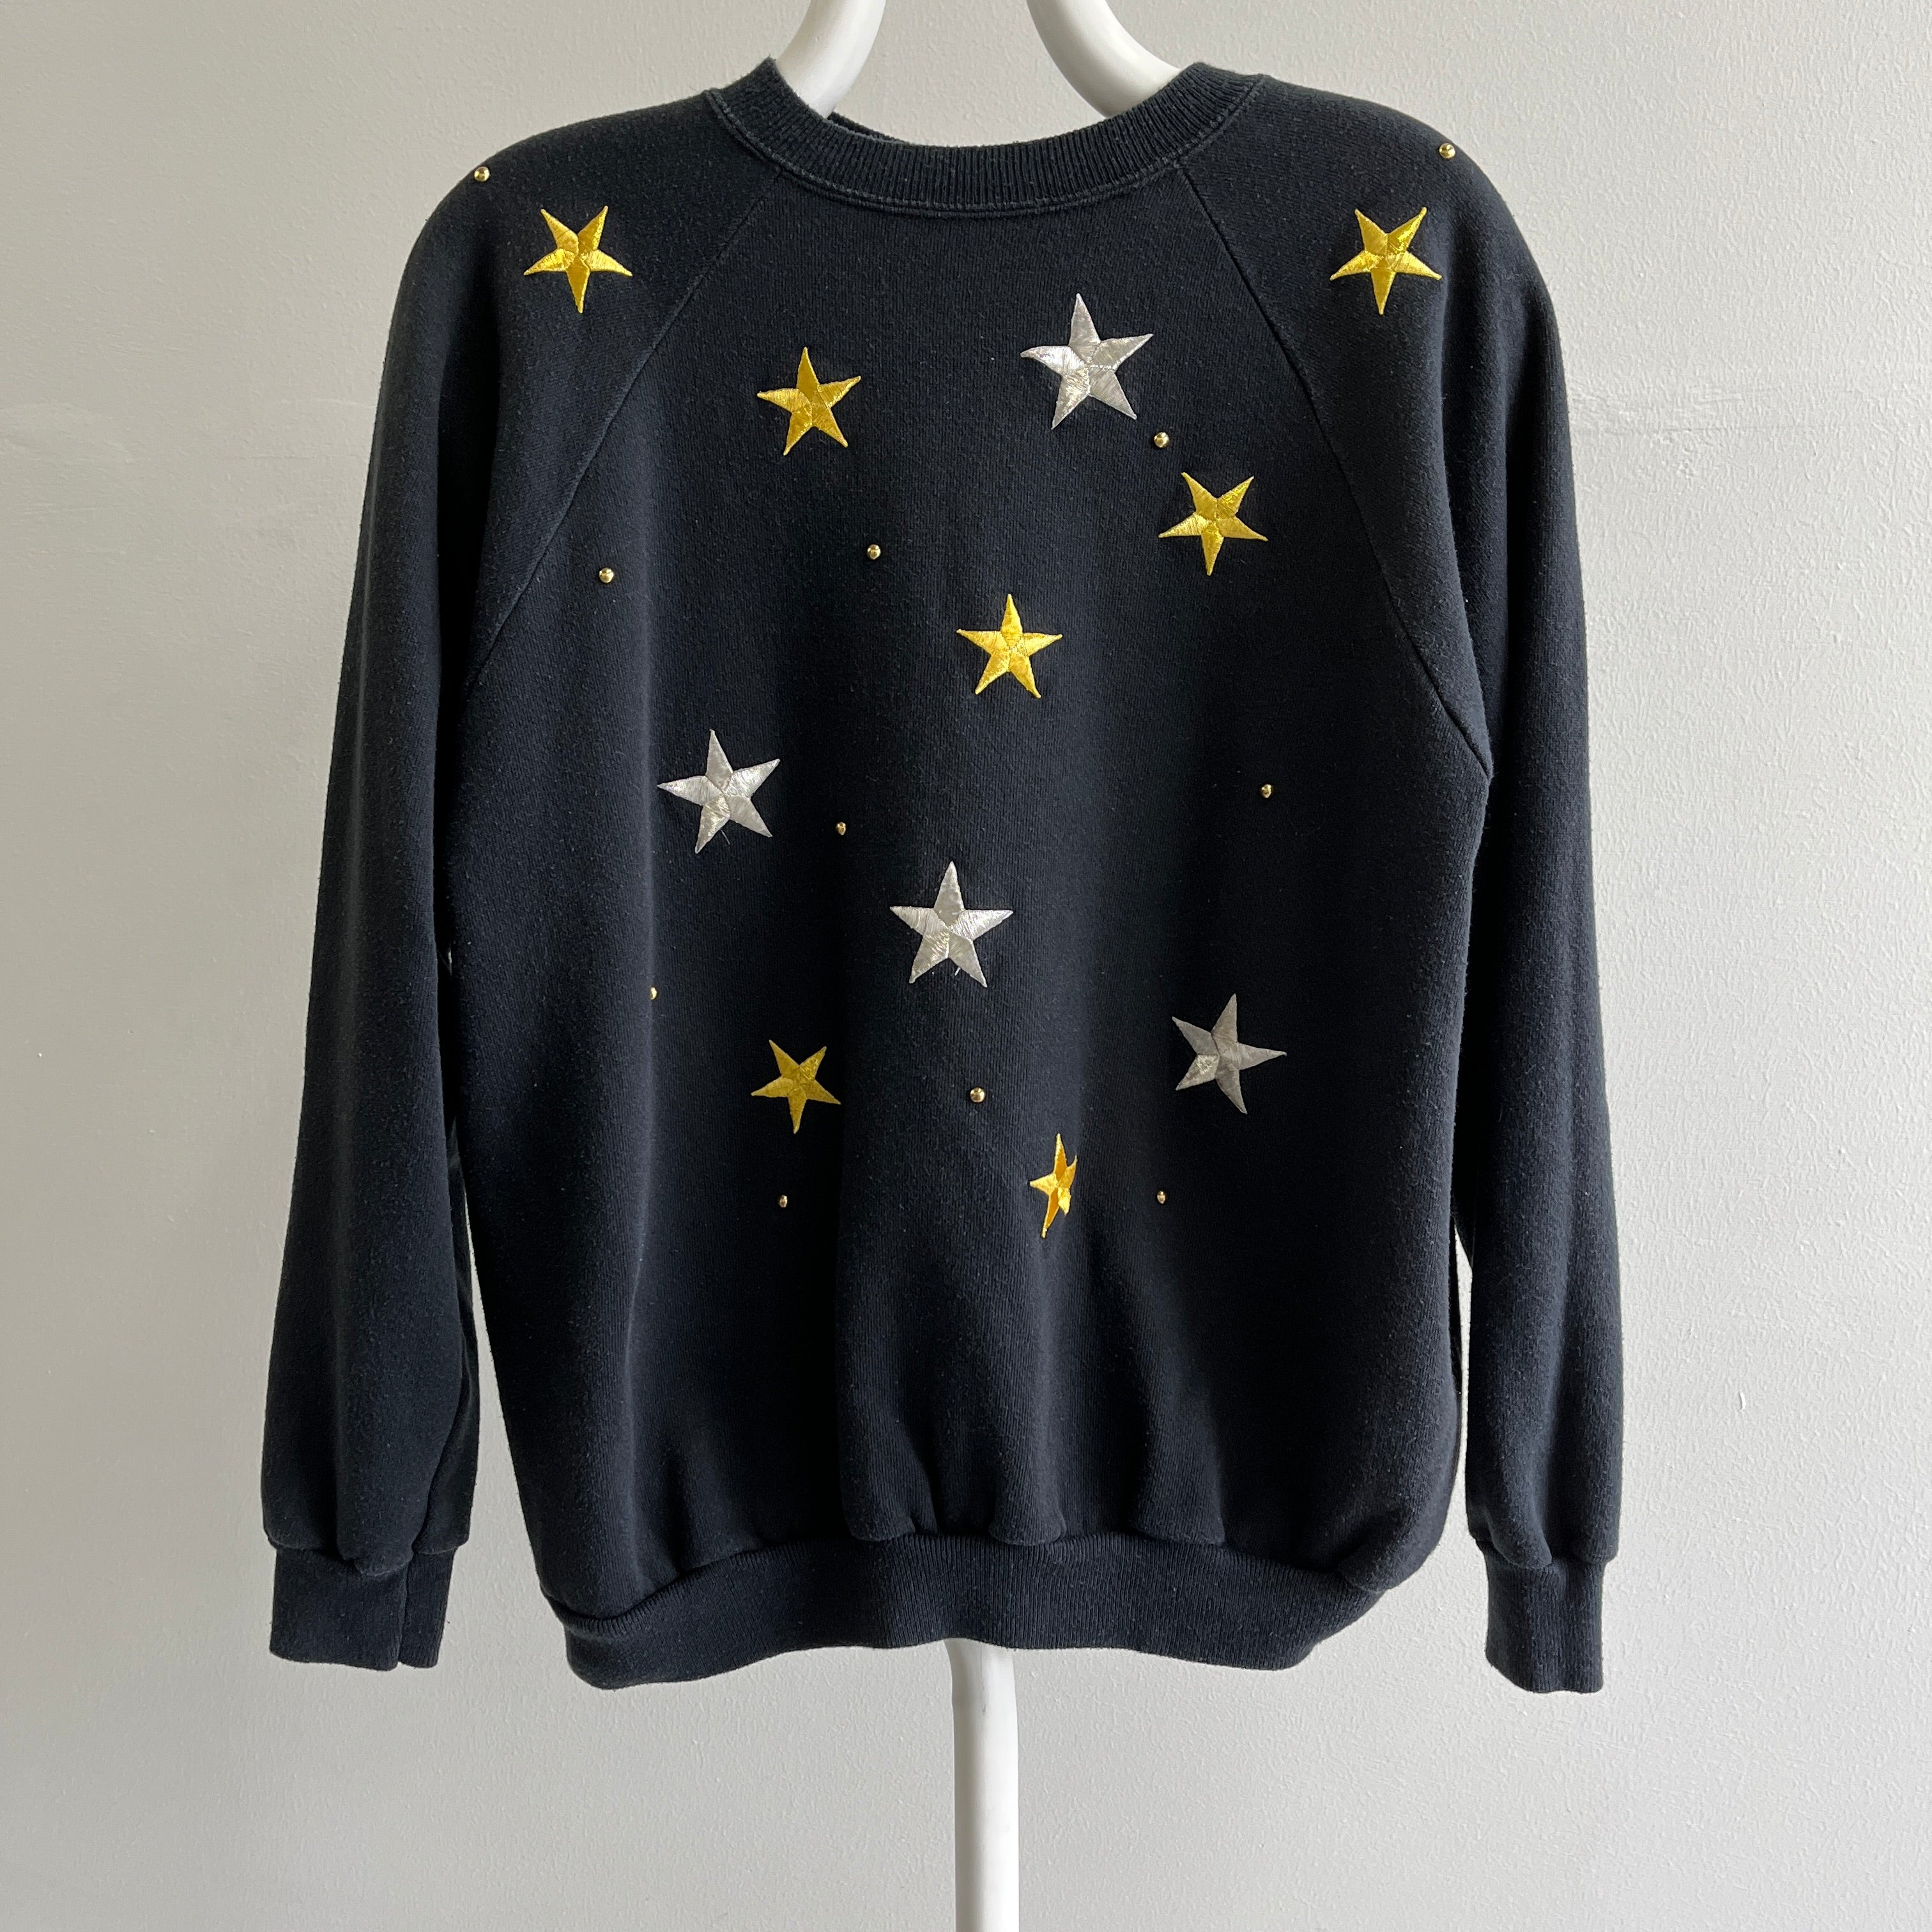 1980s Stars and Rivets Sweatshirt - Oh My!